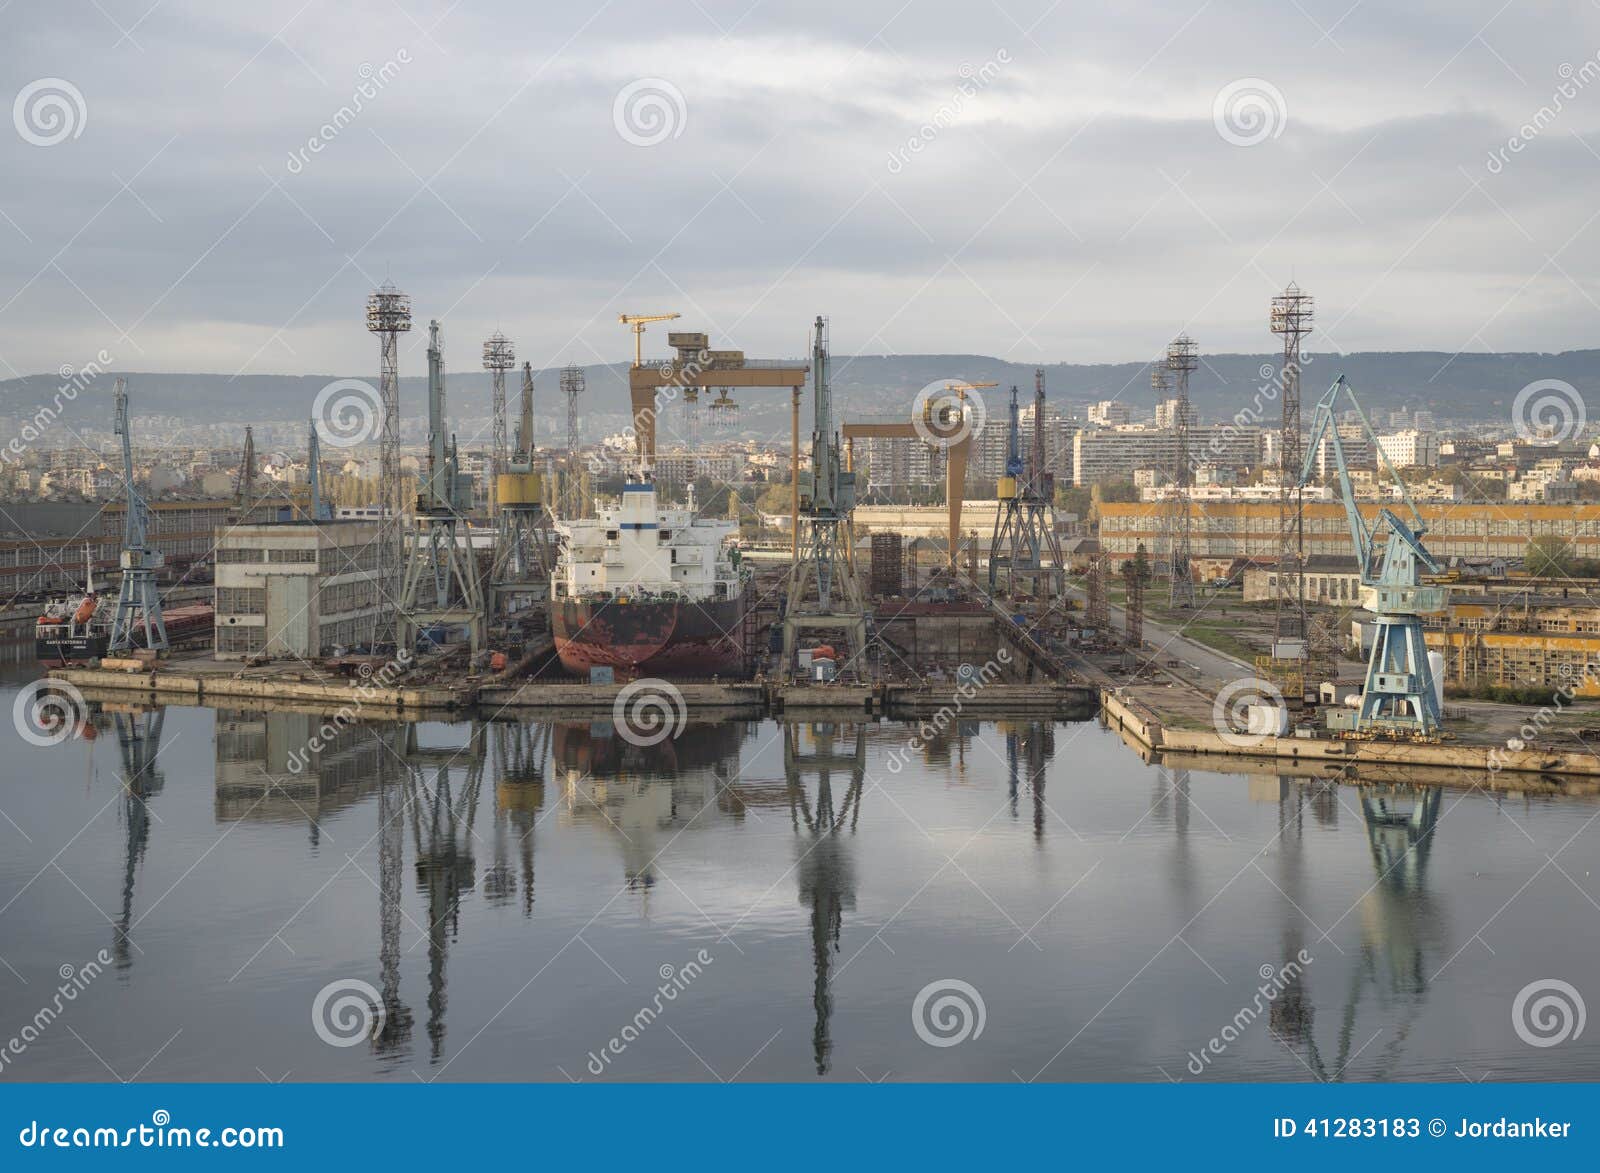 varna, bulgaria shipyards